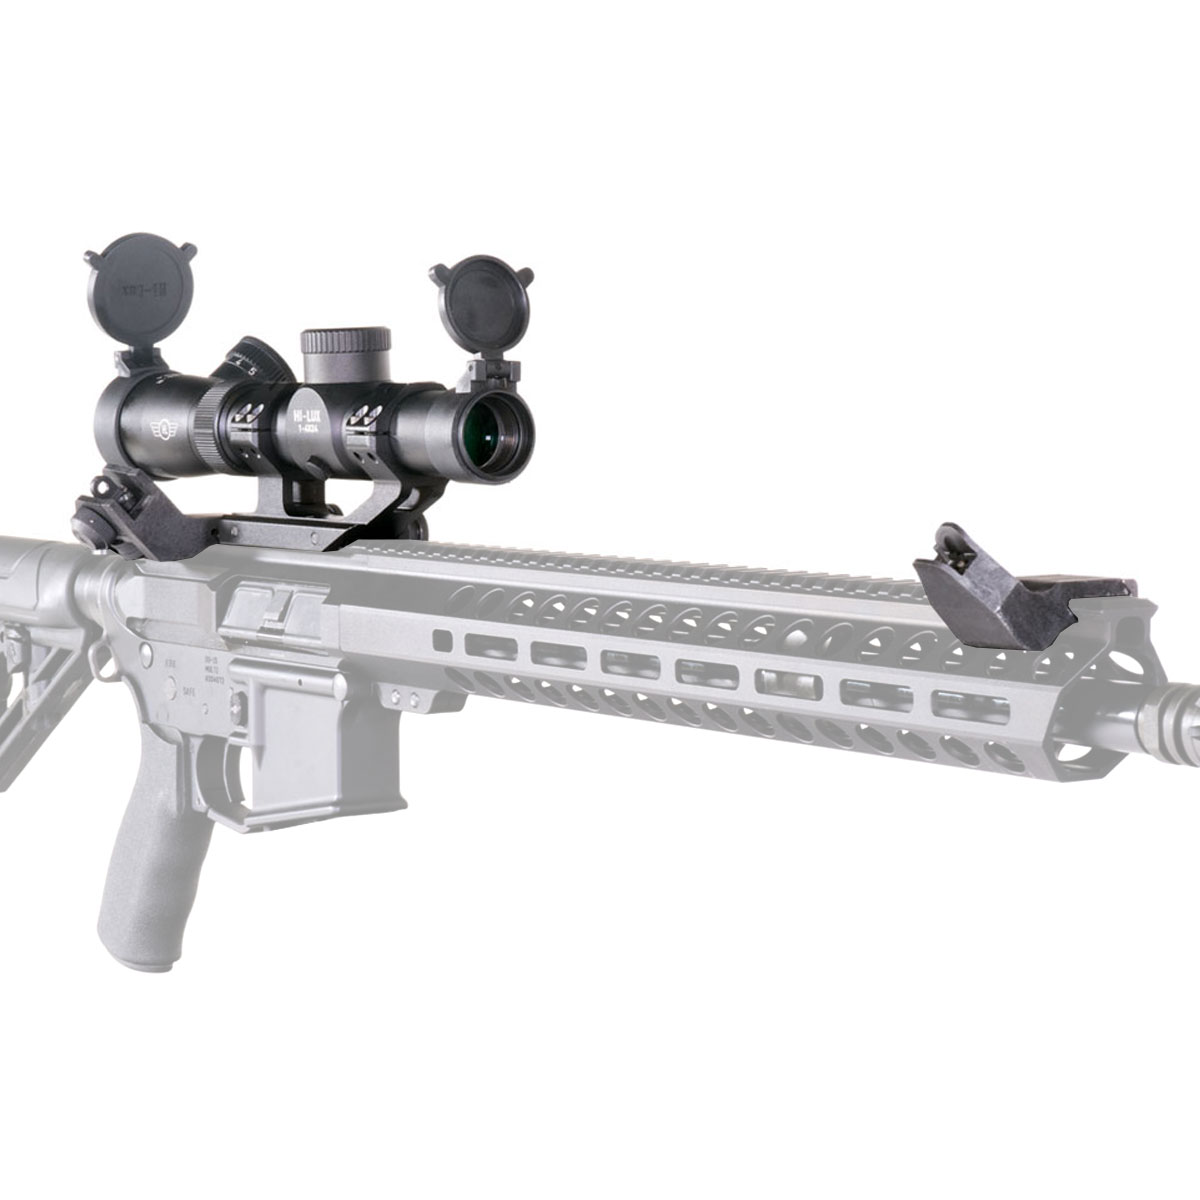 Range Loadout: CMR4 1-4X24 LPVO Rifle Scope + Single Piece Optic Mount + JE Machine Glass Filled Polymer 45 Degree Offset Sights